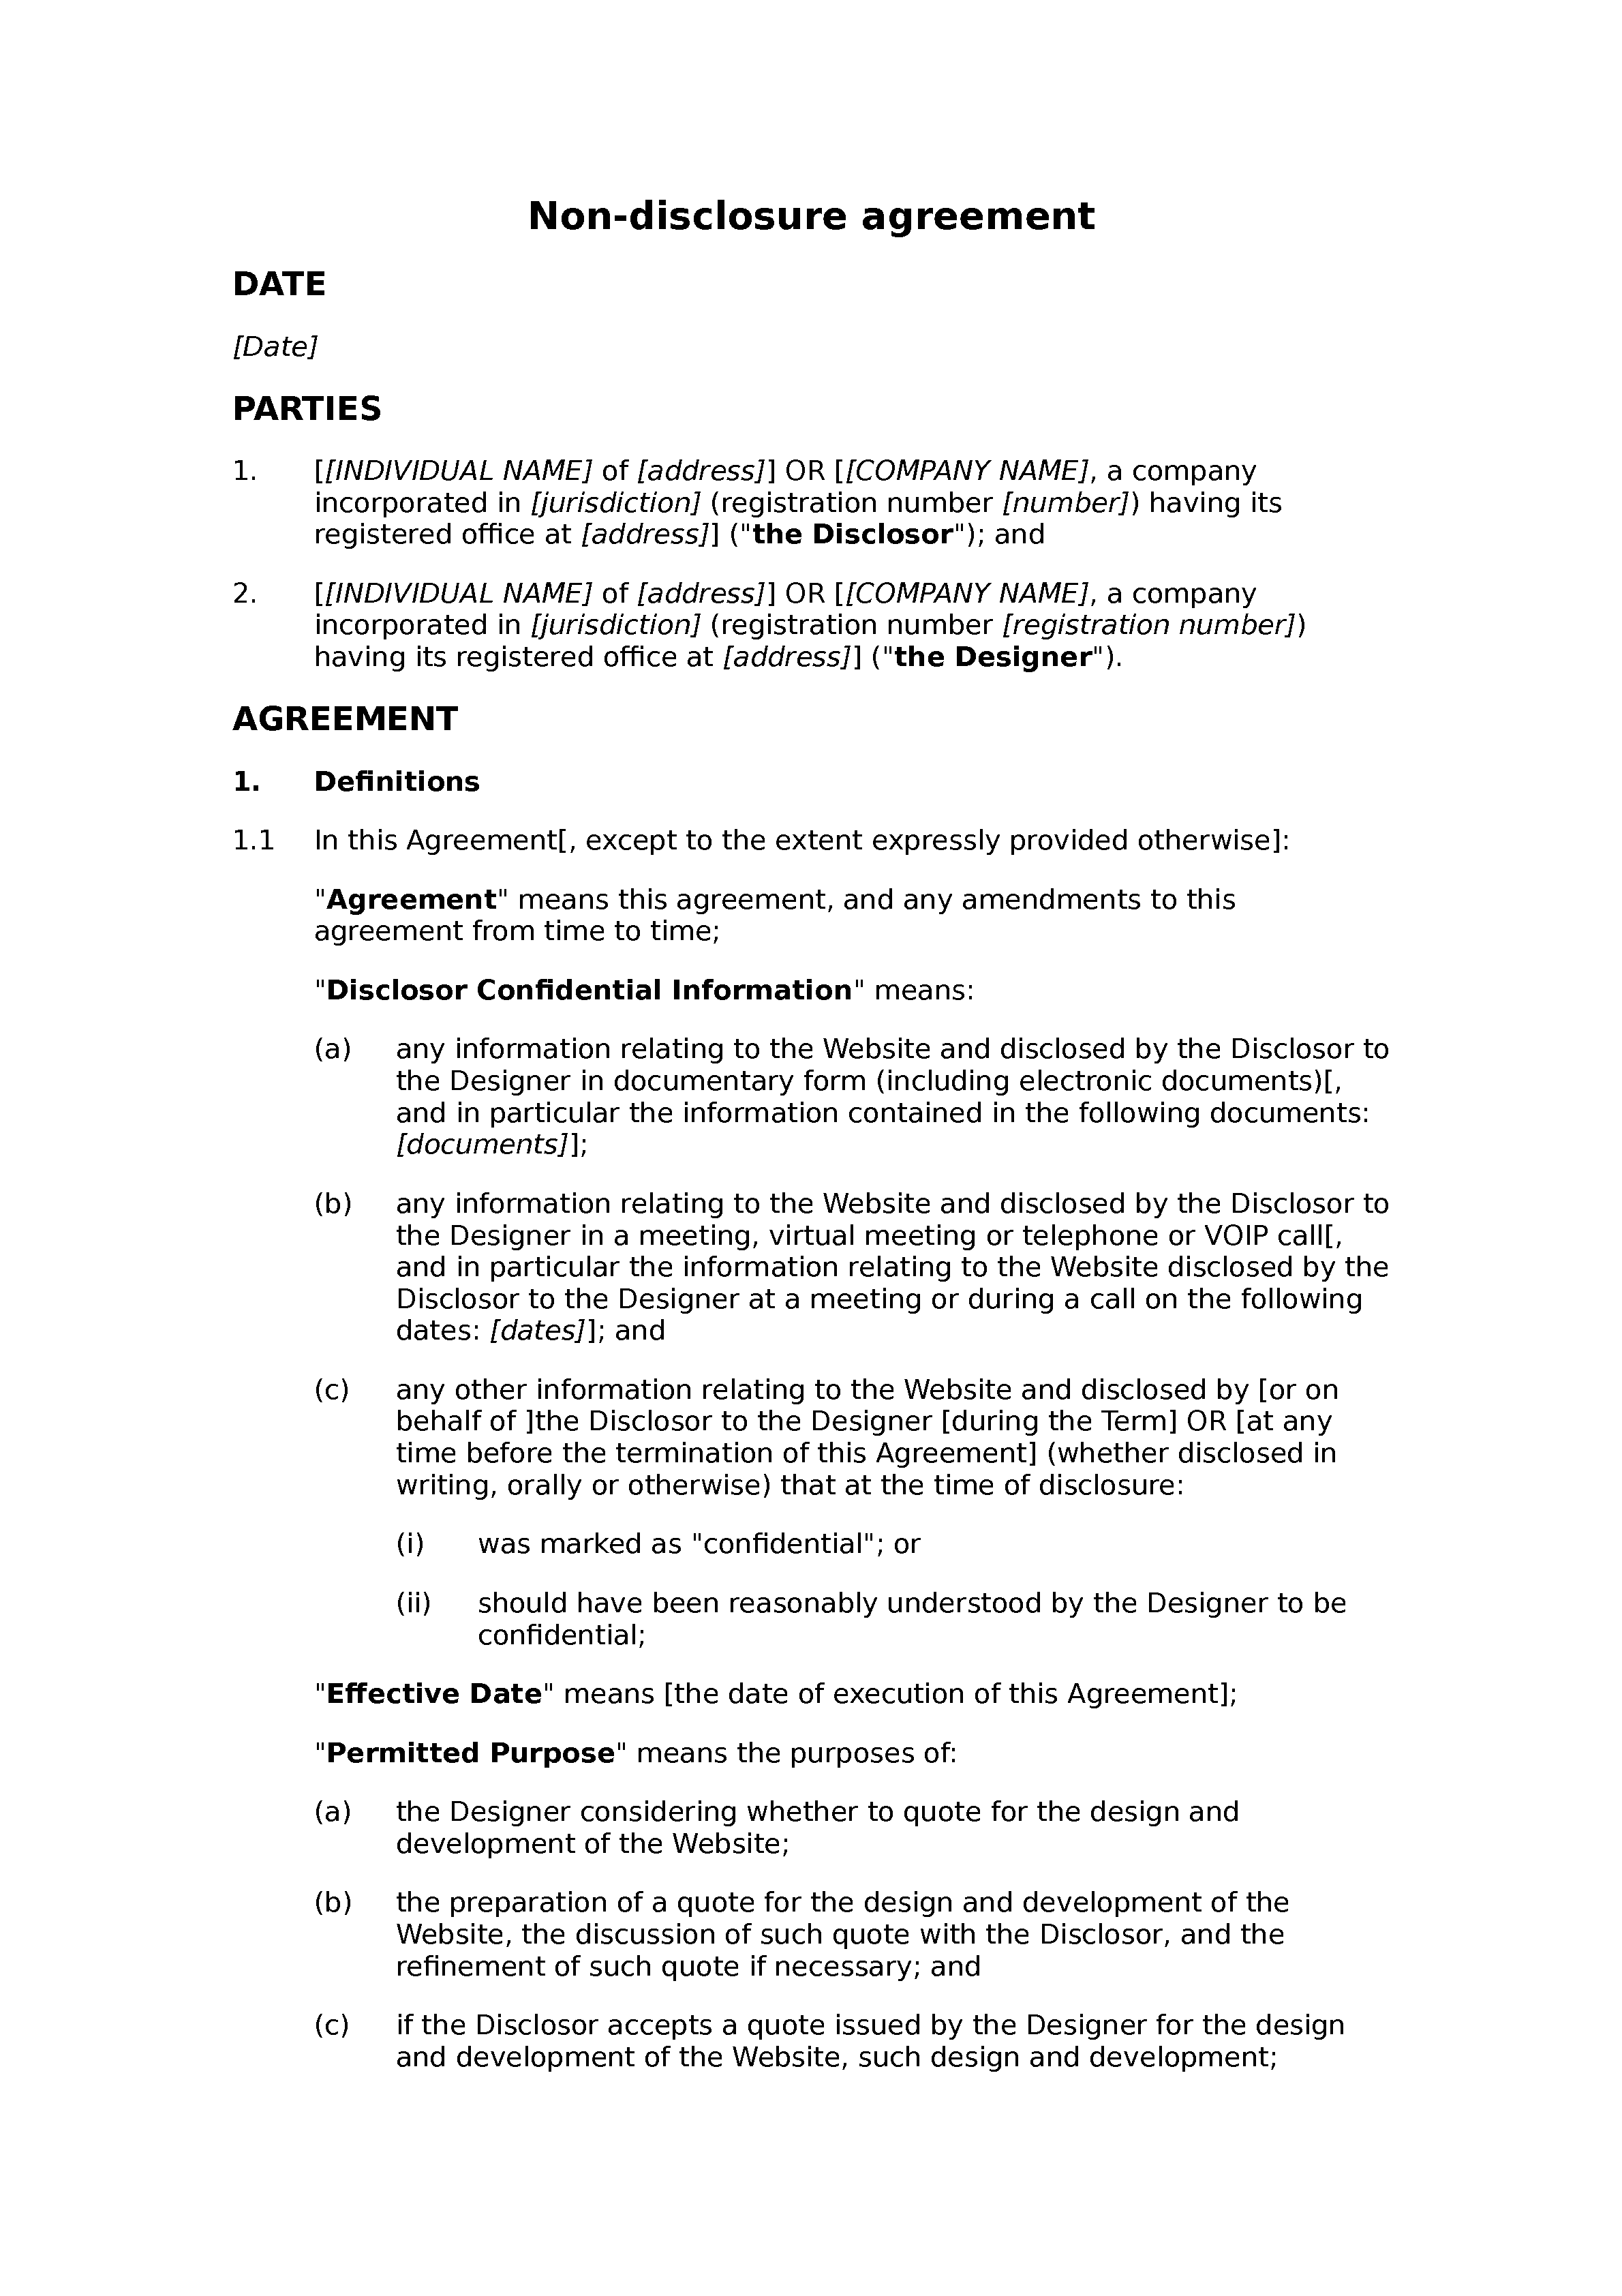 Non-disclosure agreement (web design) document preview